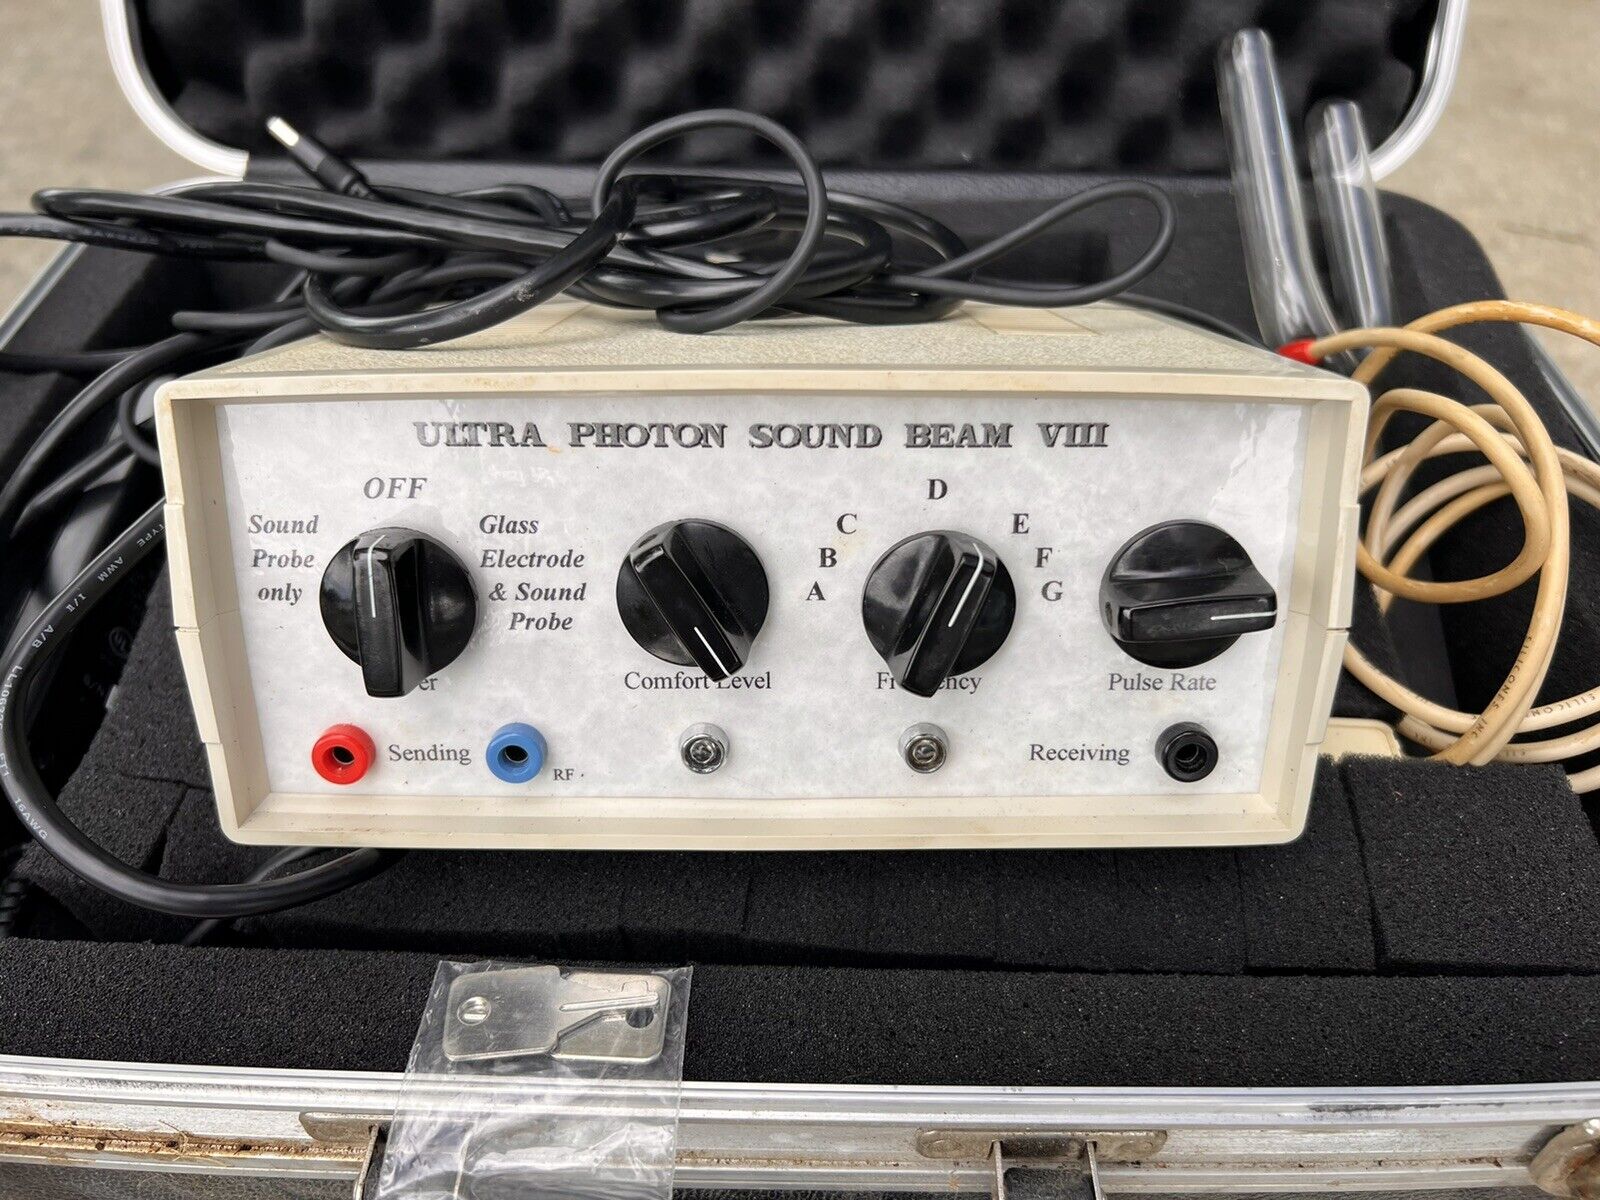 Ultra Photon Sound Beam VIII